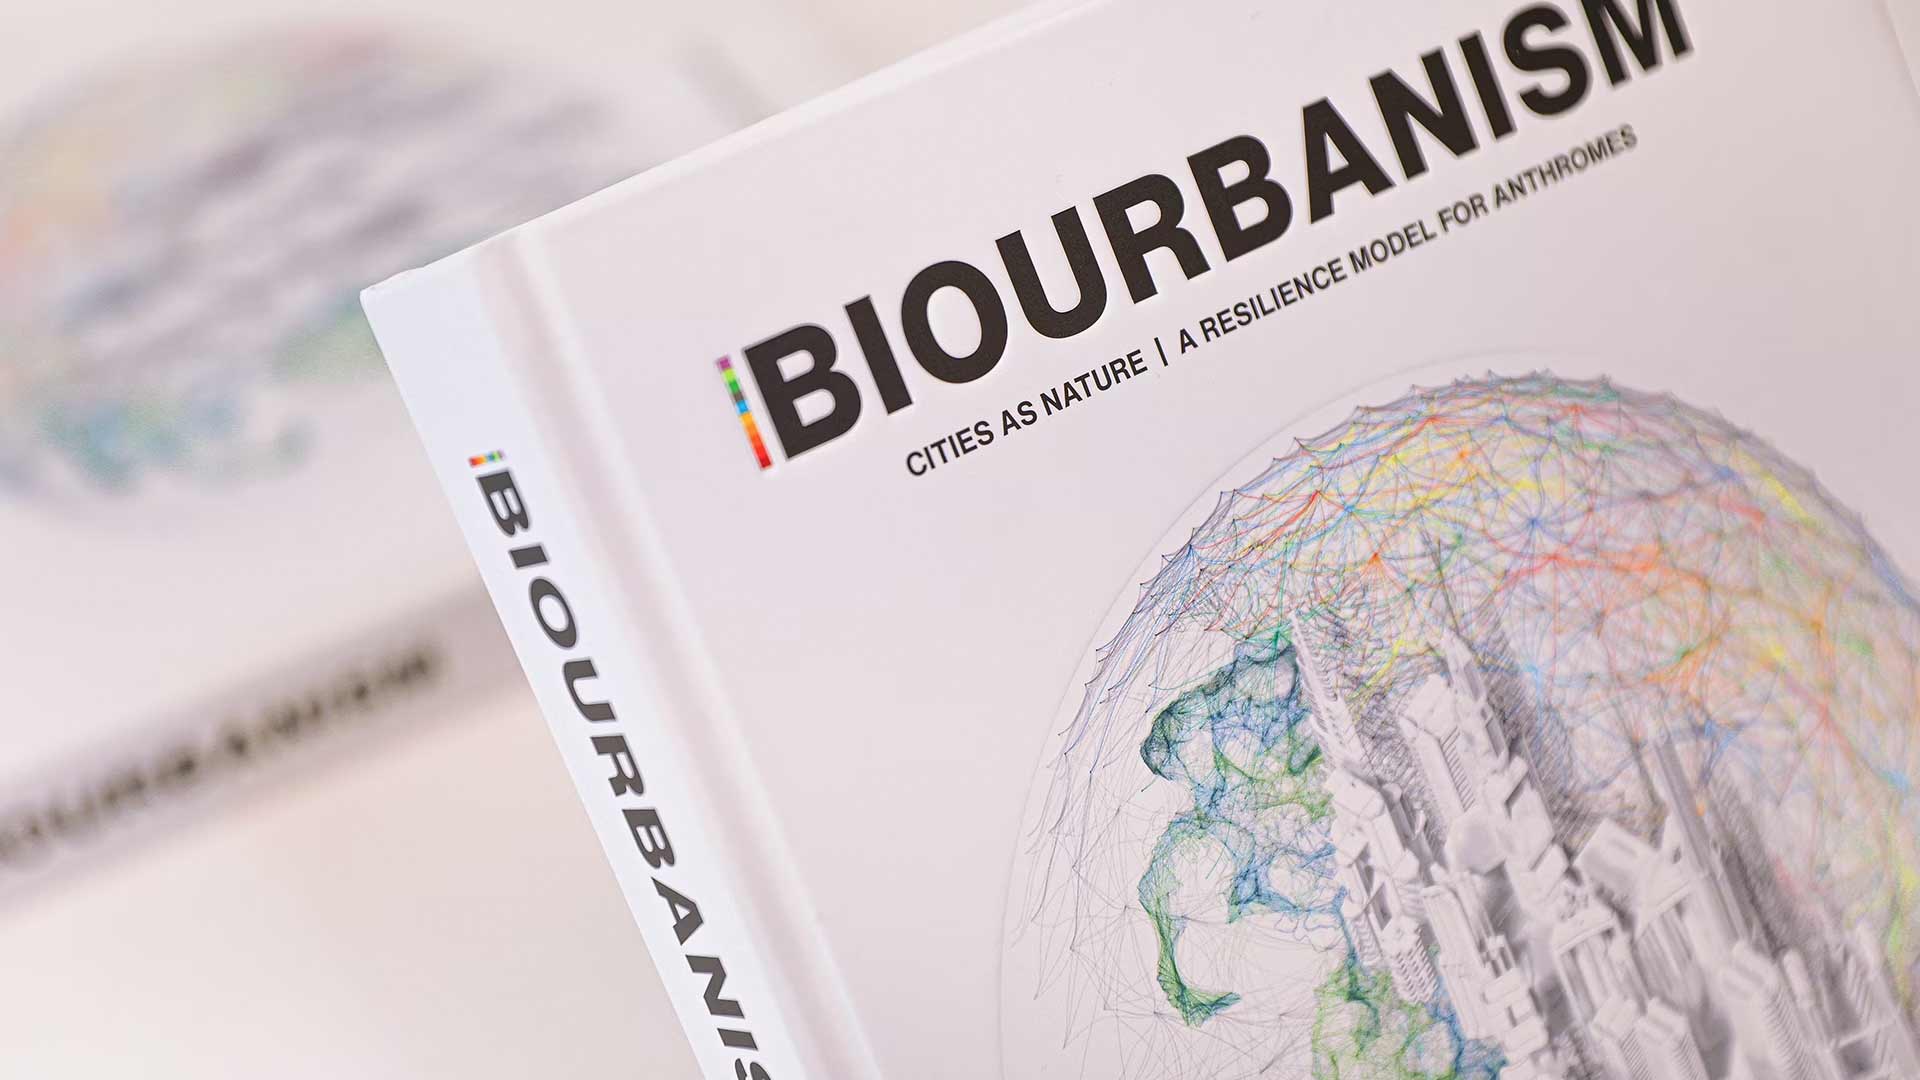 Project spotlight: Biourbanism